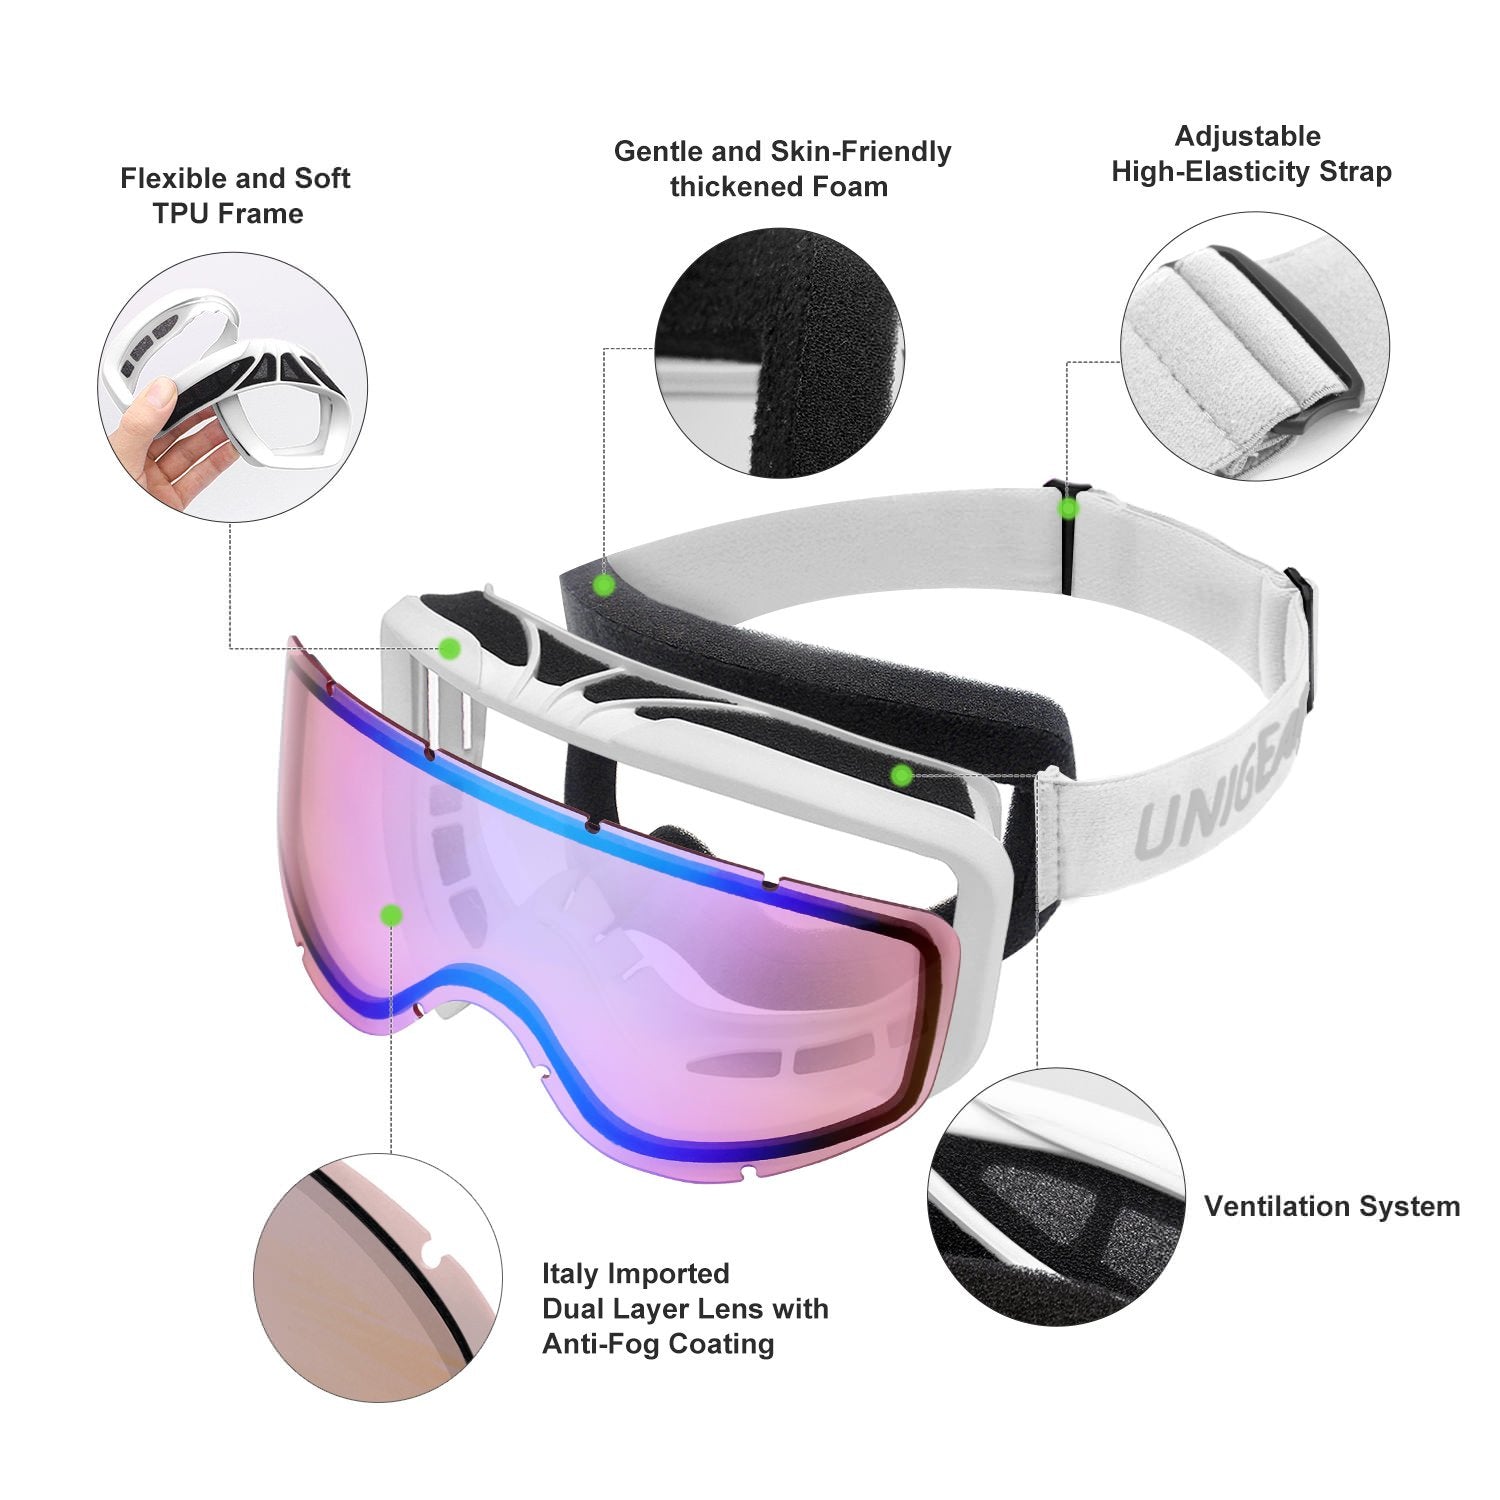 Unigear Ski Goggles, Skido X1, UV Protection Anti-fog Snow/Snowboard